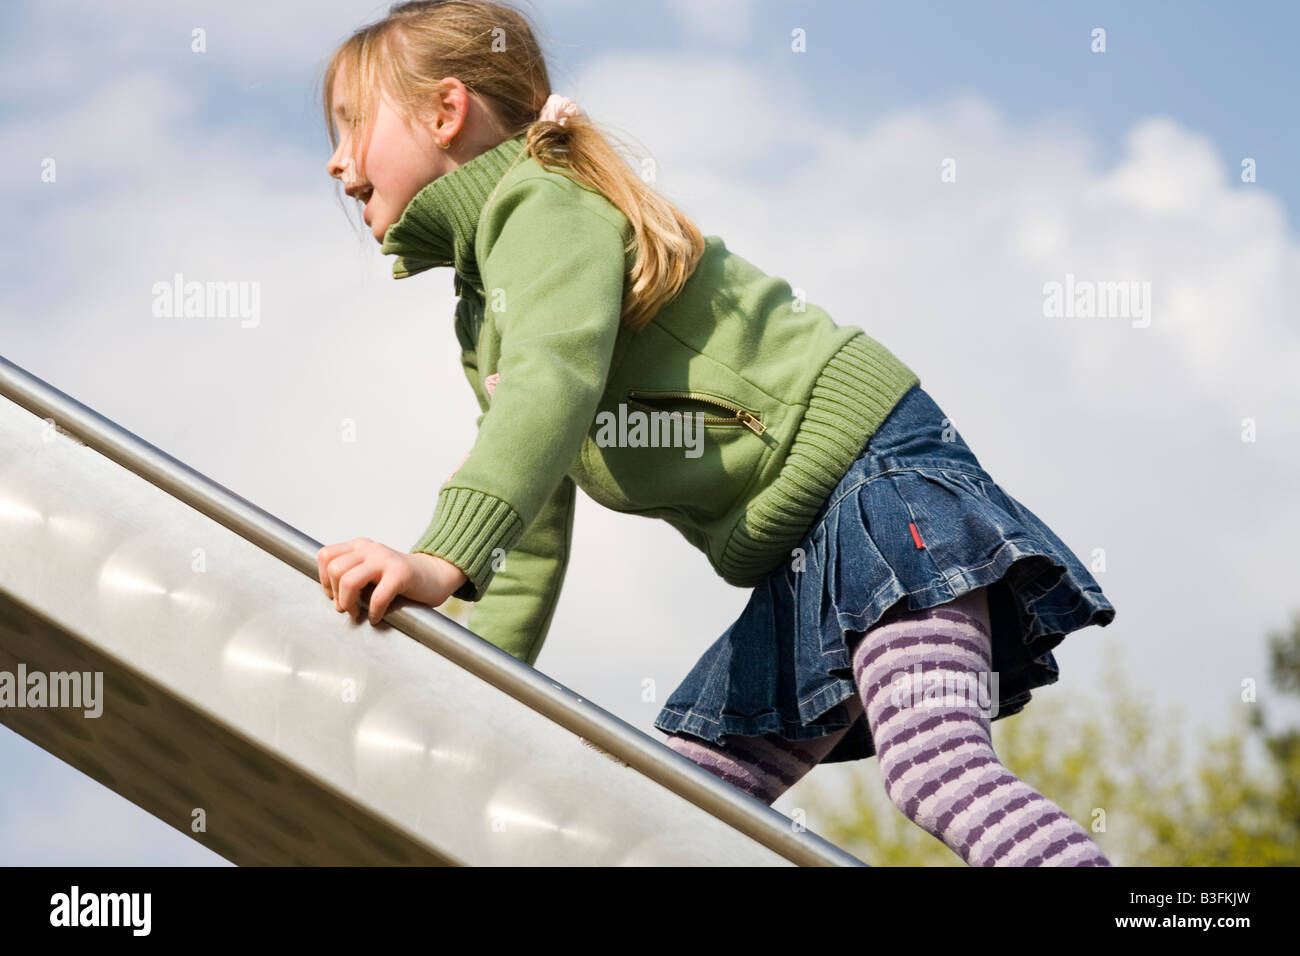 girl on the playground Stock Photo